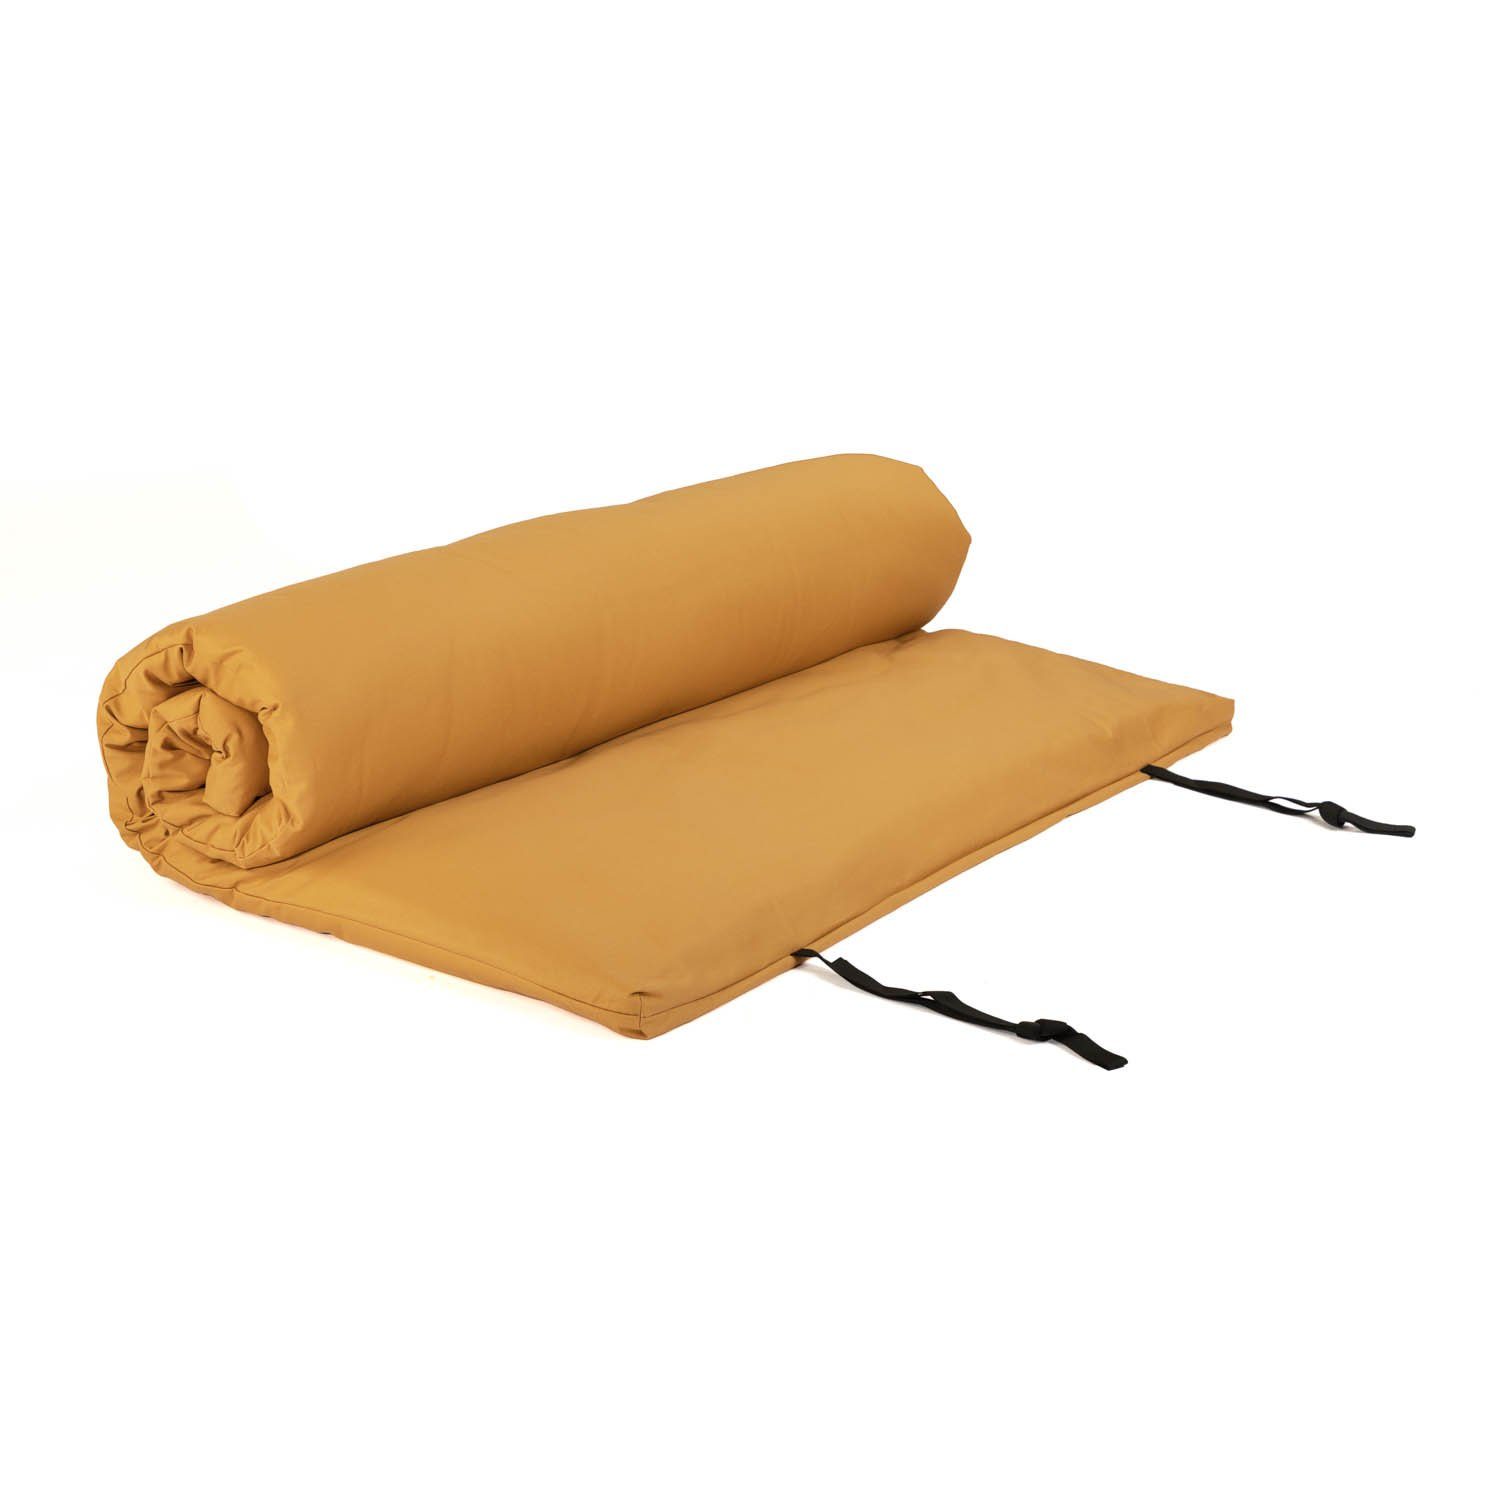 Welltouch Meditationskissen Shiatsumatte mit abnehmbarem Bezug 100x200 cm, honig-gelb, 4 lagig